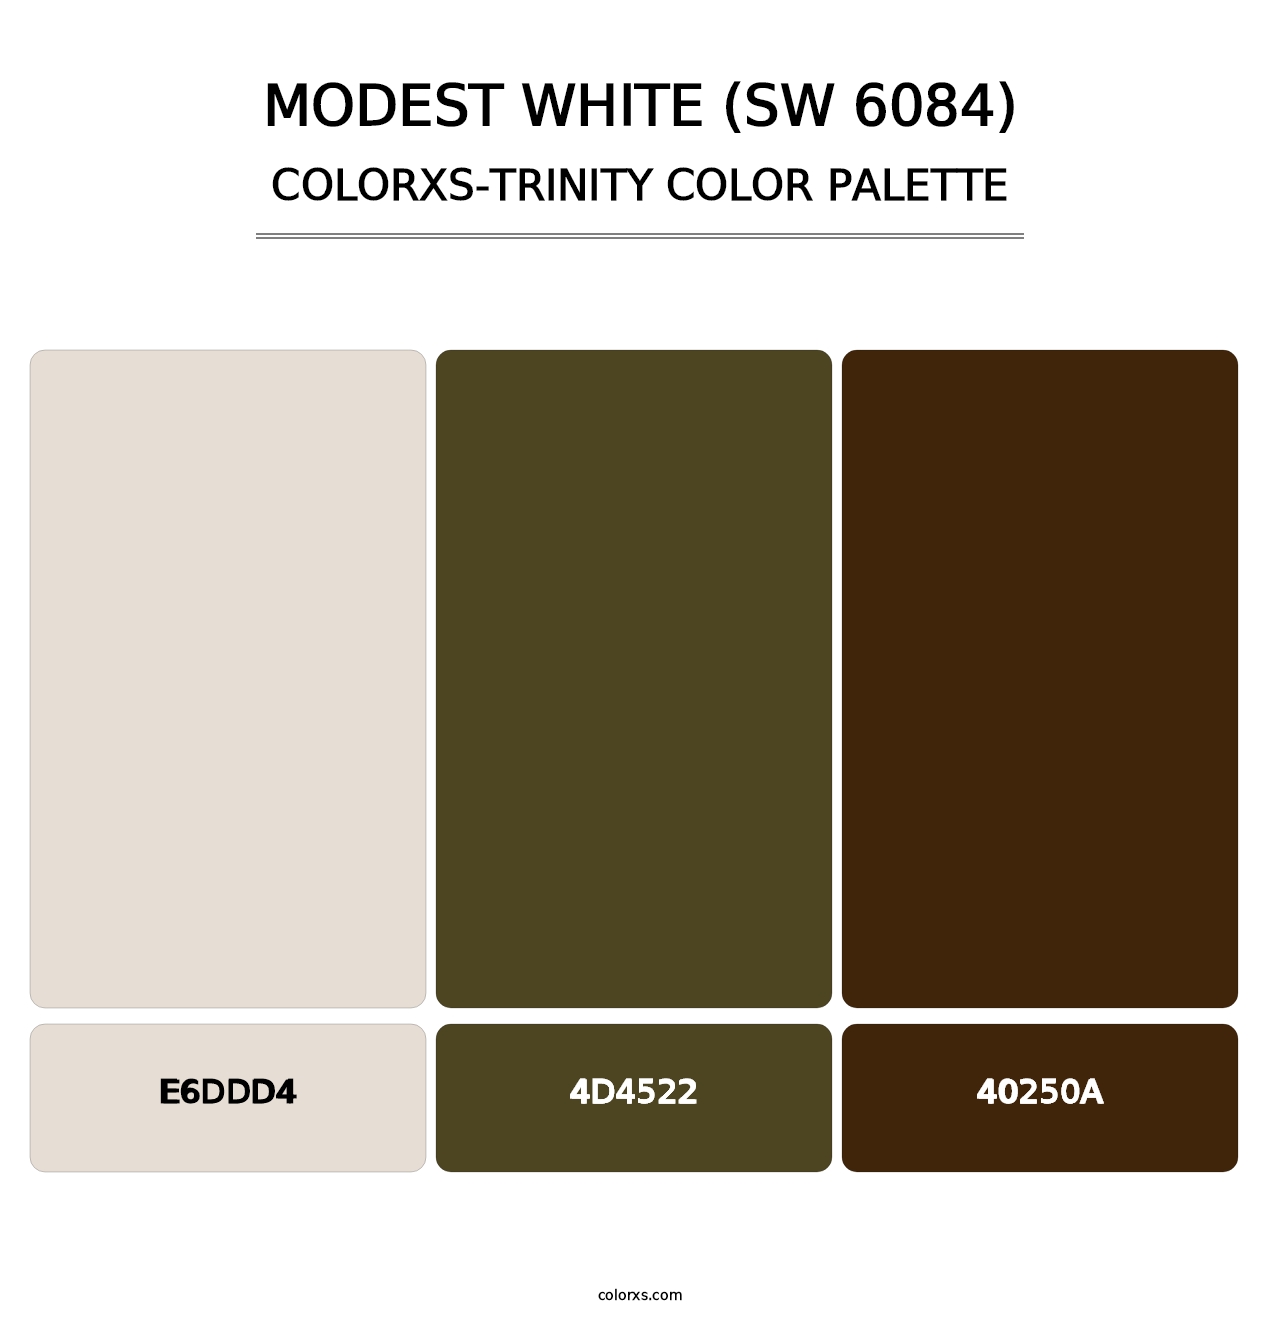 Modest White (SW 6084) - Colorxs Trinity Palette